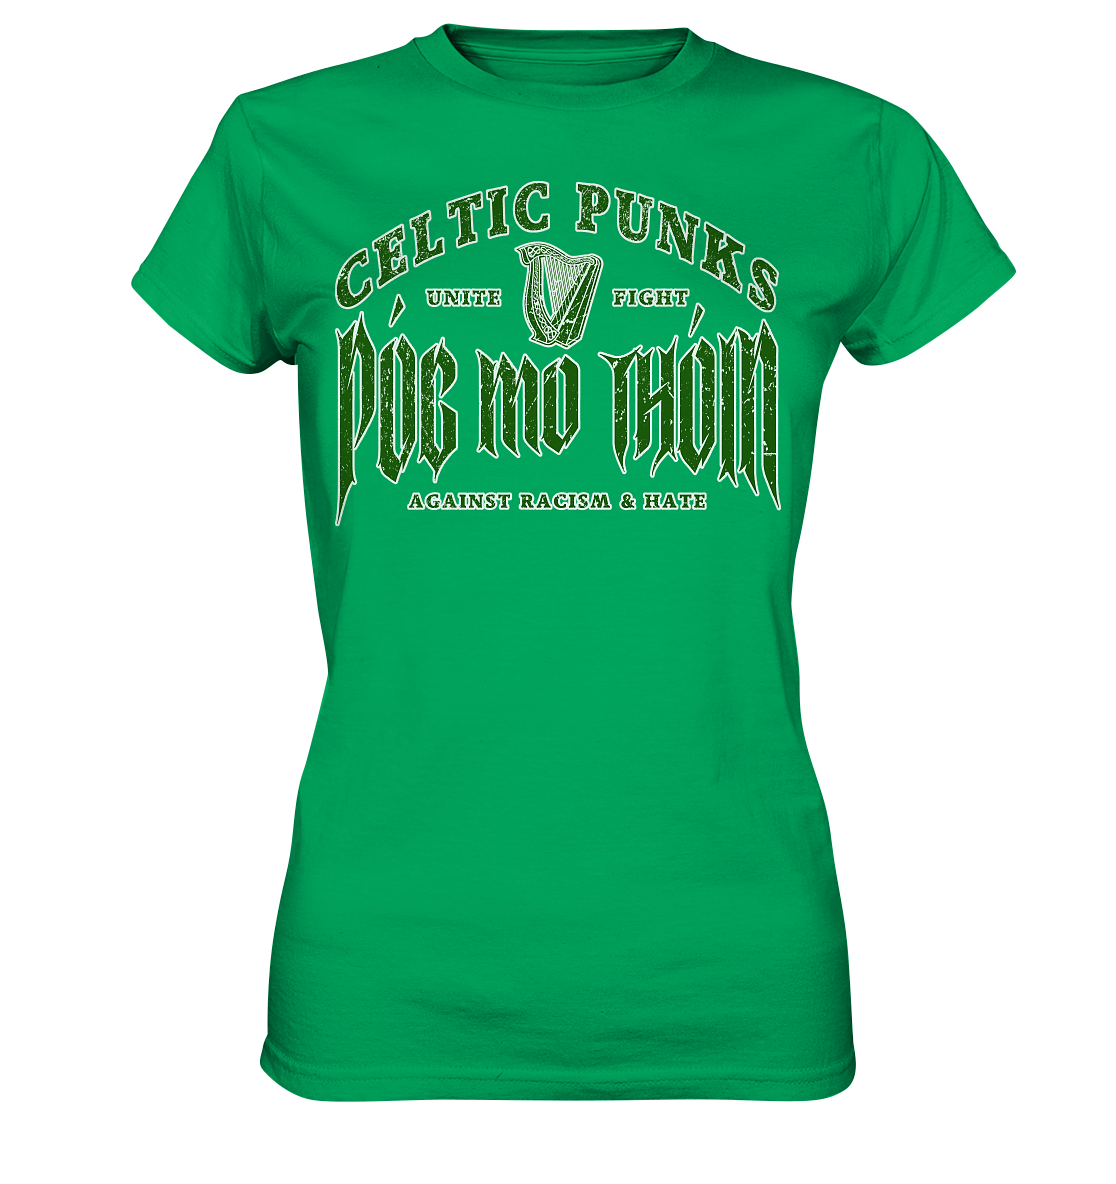 Póg Mo Thóin Streetwear "Celtic Punks Against Racism & Hate / Unite & Fight" - Ladies Premium Shirt